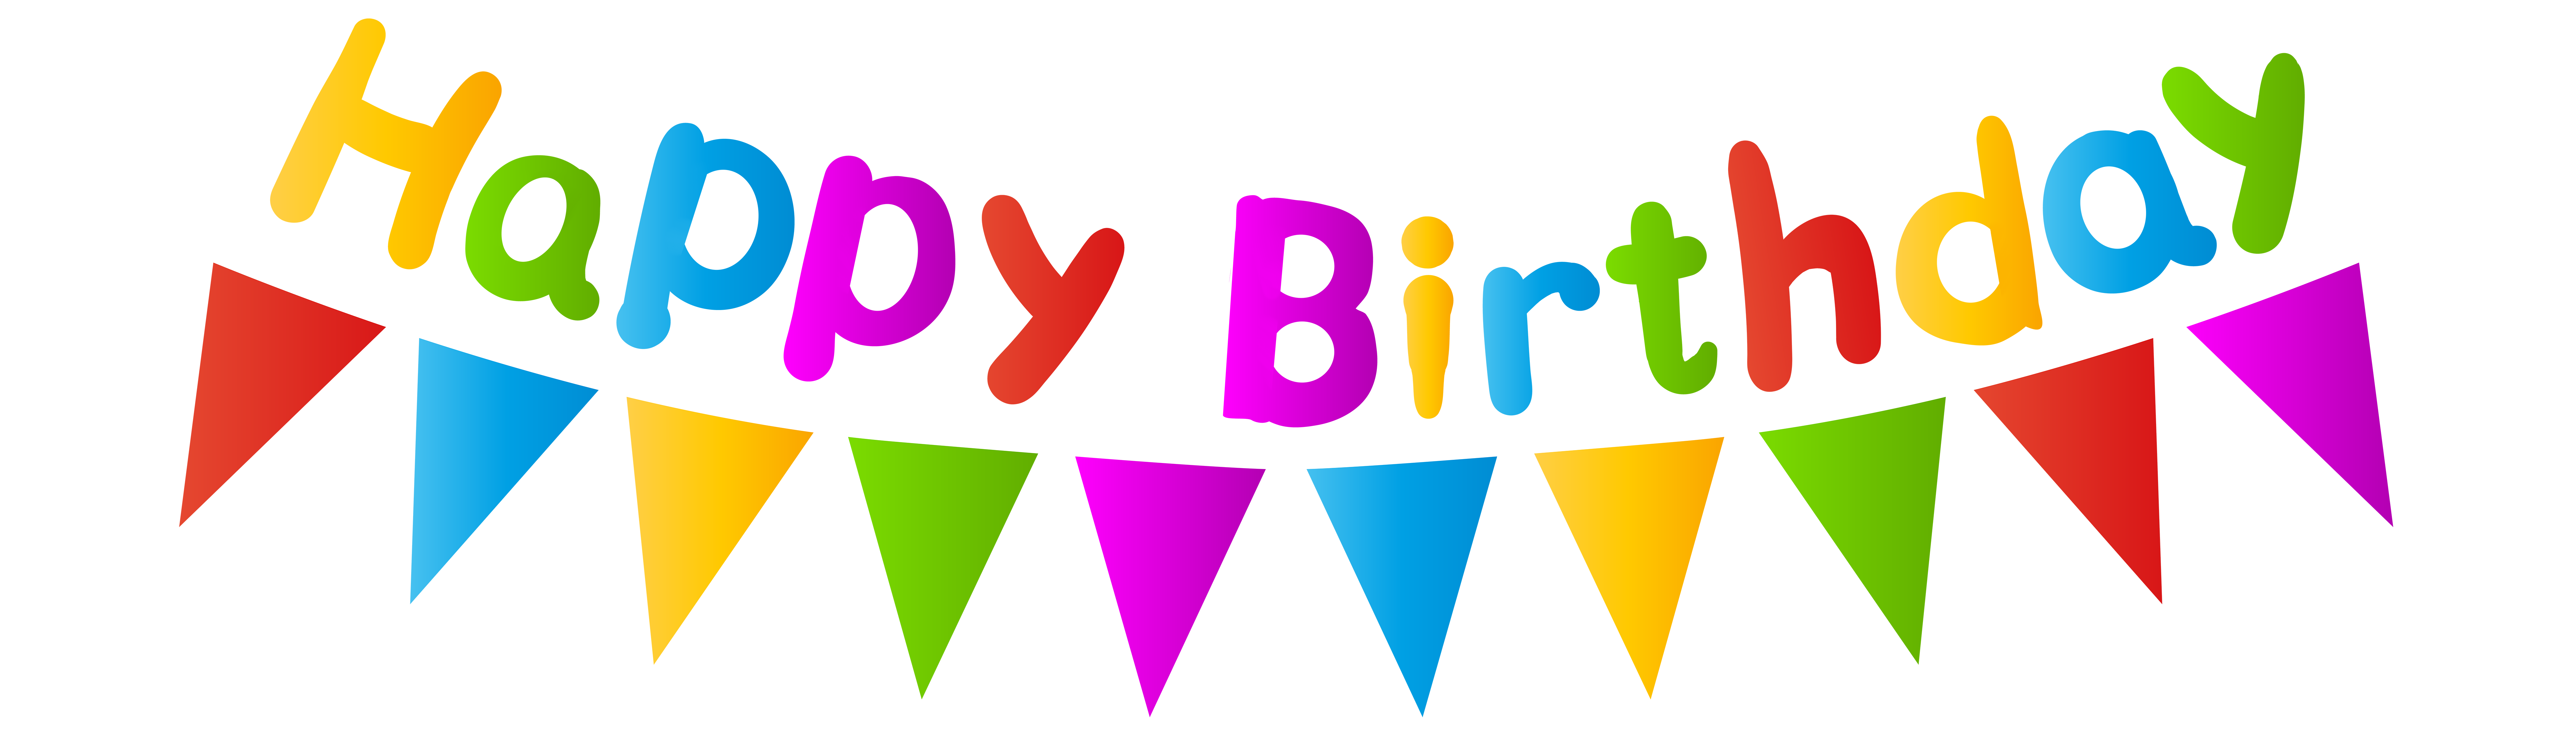 Free: Happy Birthday Border Clipart - Birthday Streamer Clip Art 